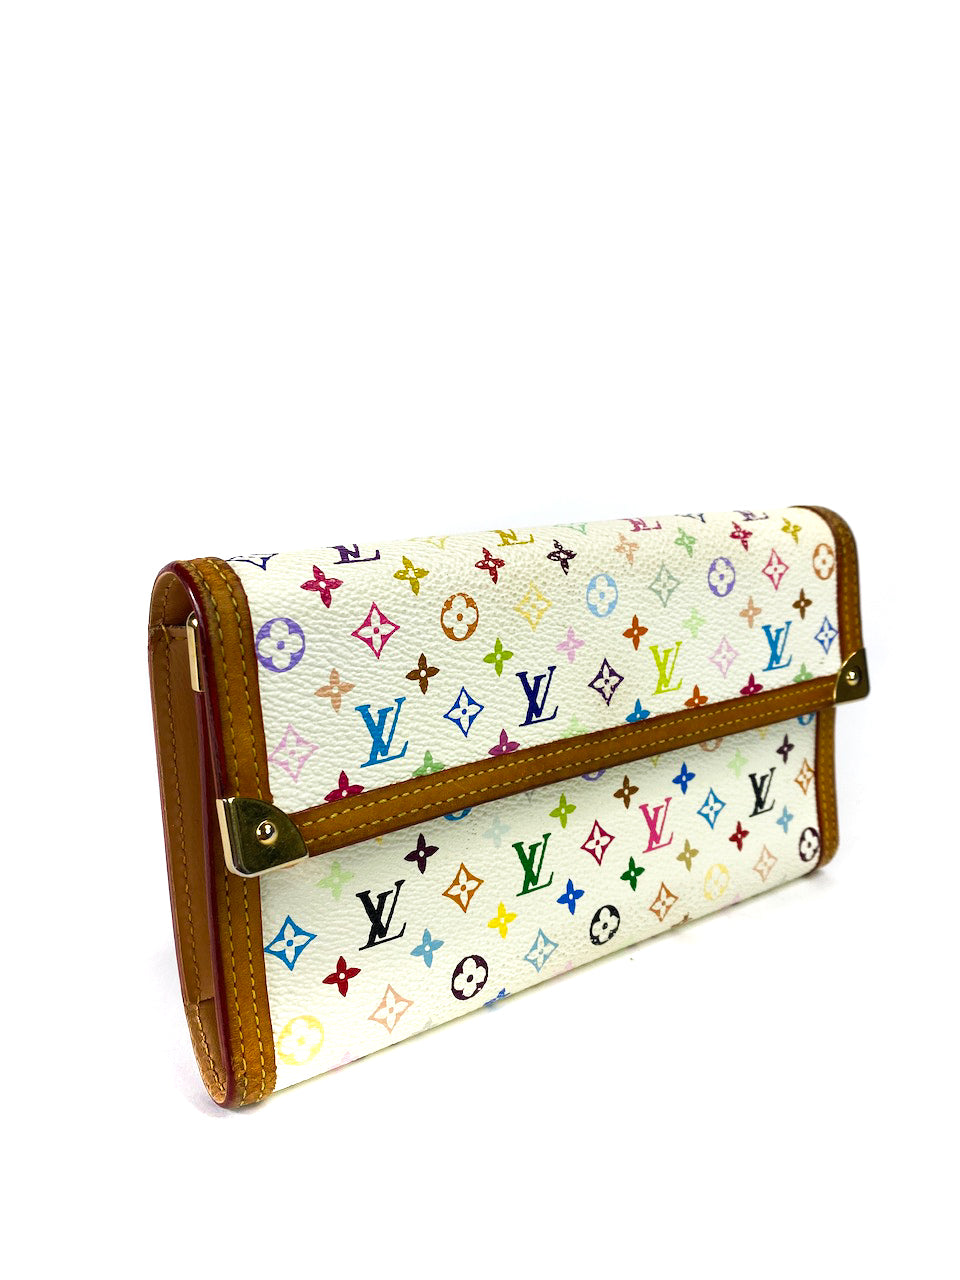 Louis Vuitton Multi Color Monogram Flap Purse - As Seen on Instagram Live 12/07/20 - Siopaella Designer Exchange